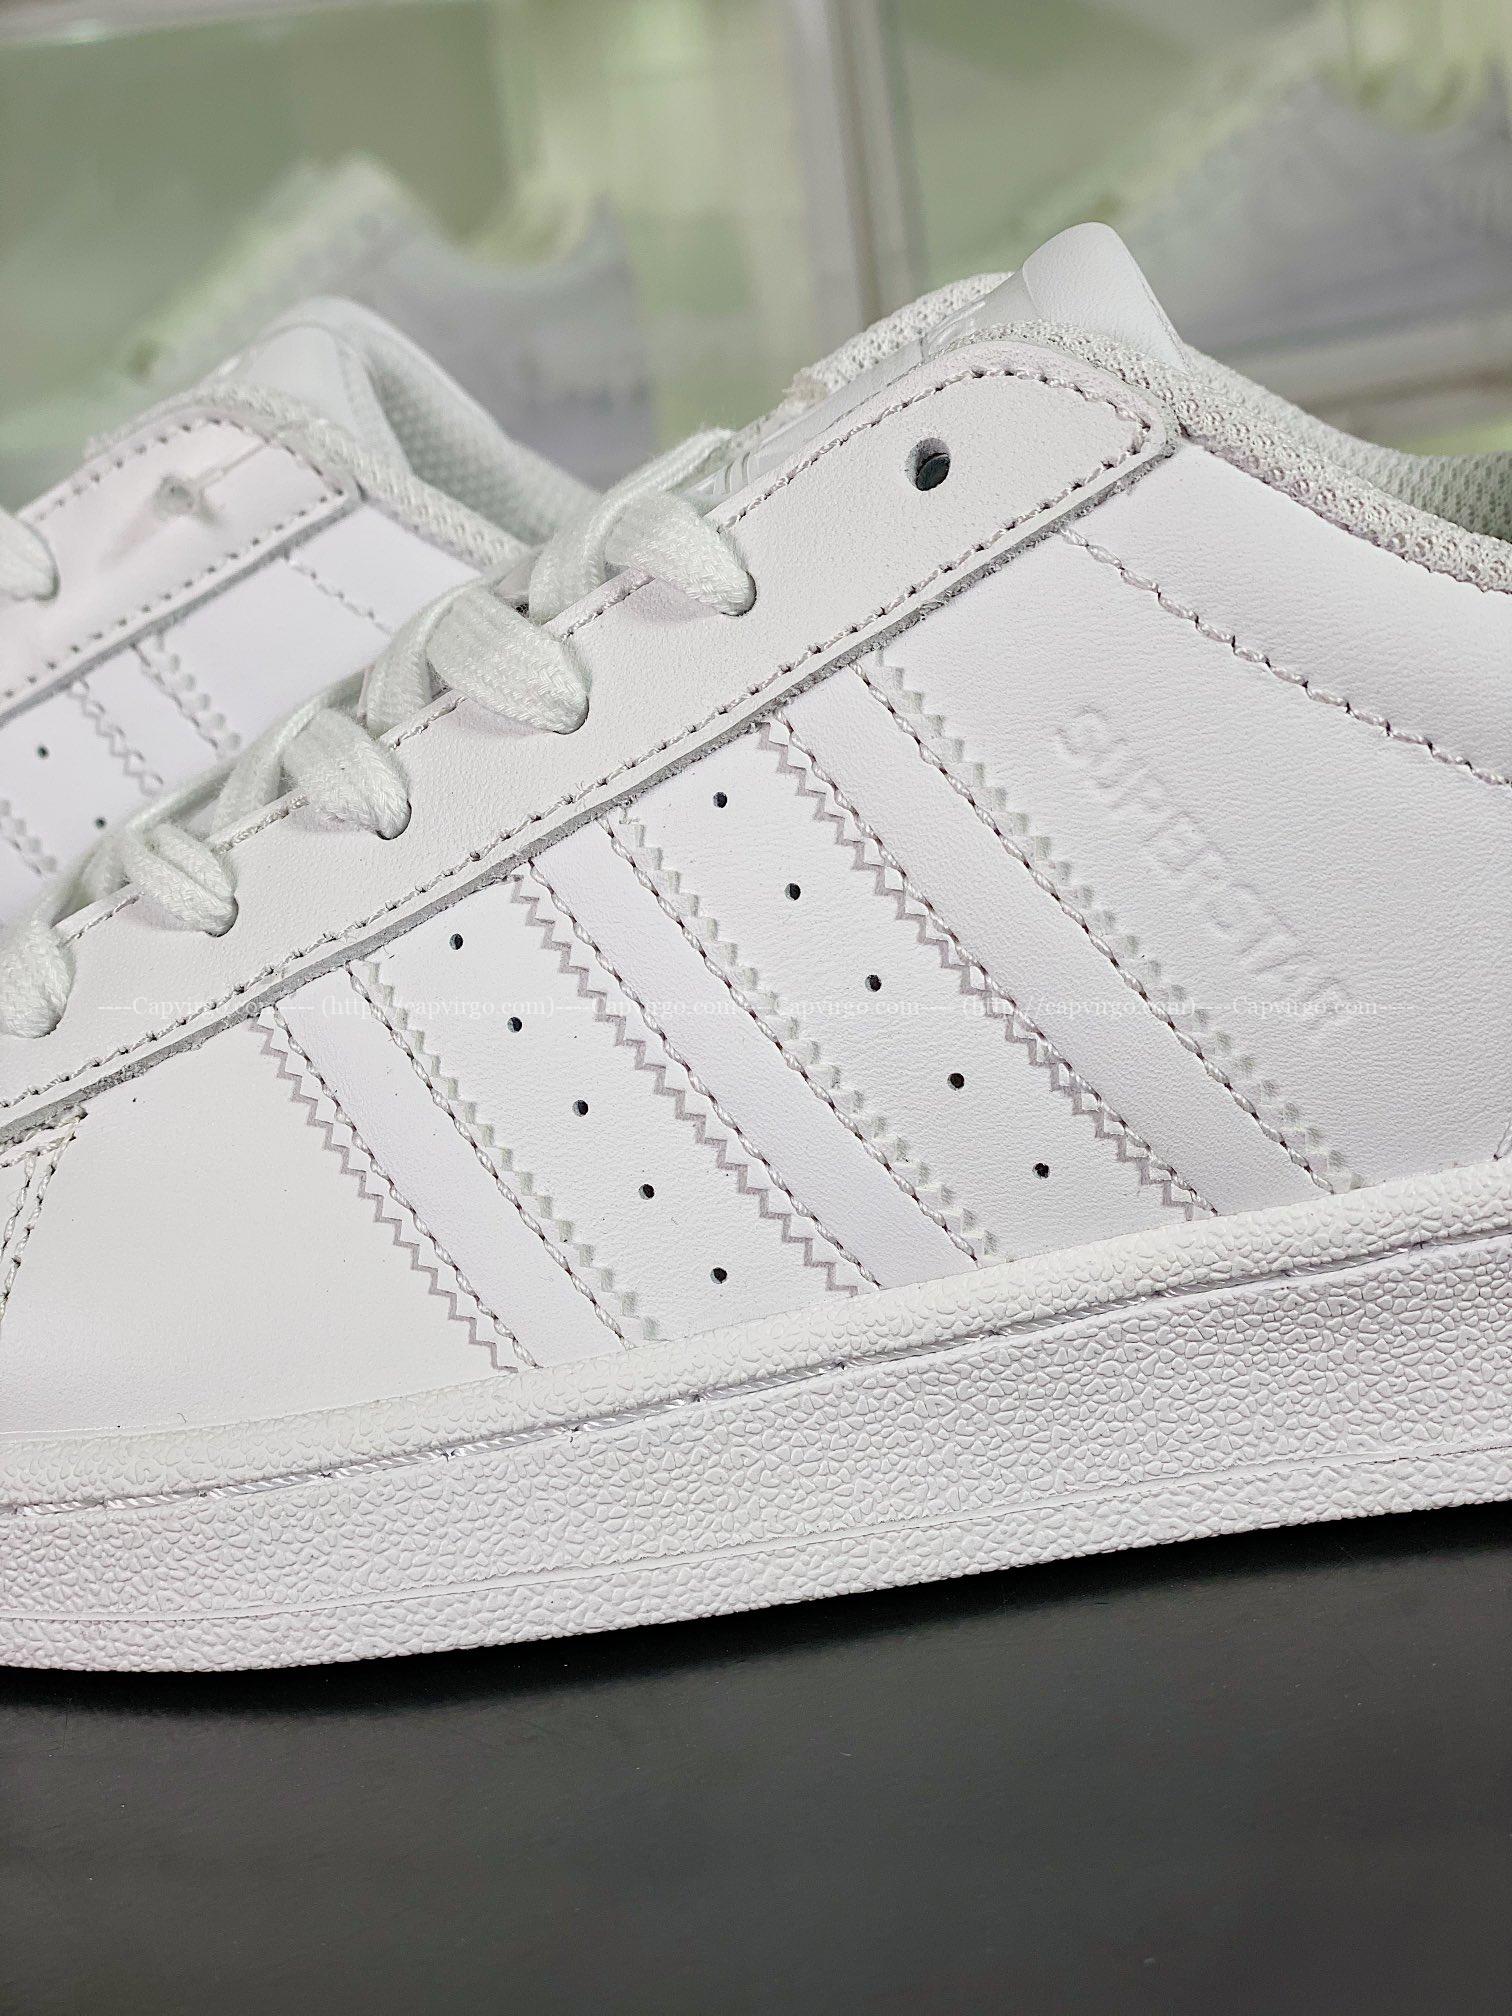 Giày Adidas Superstar màu full trắng